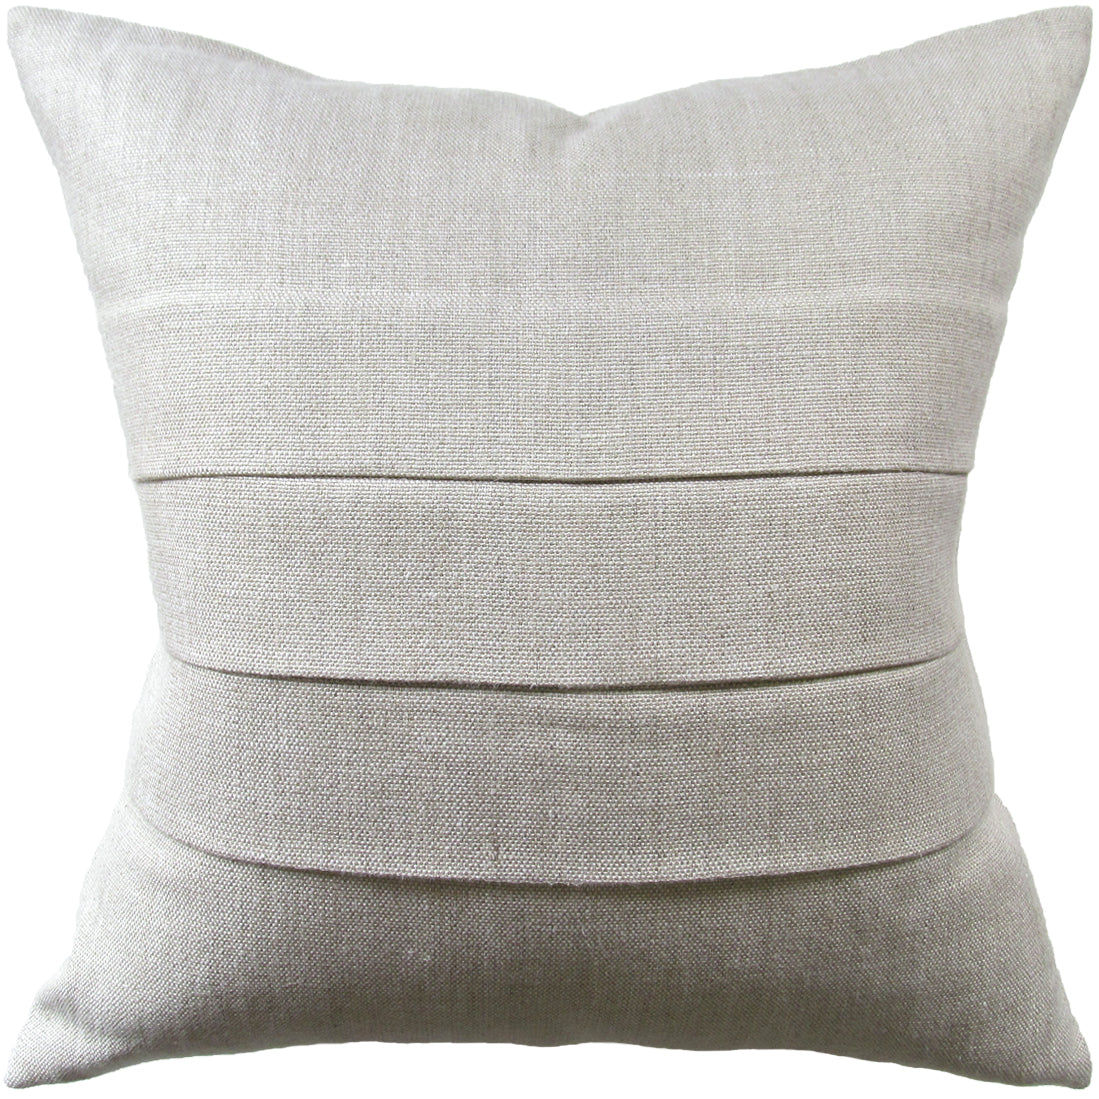 Slubby Linen Banded Throw Pillow - 22x22 Flax